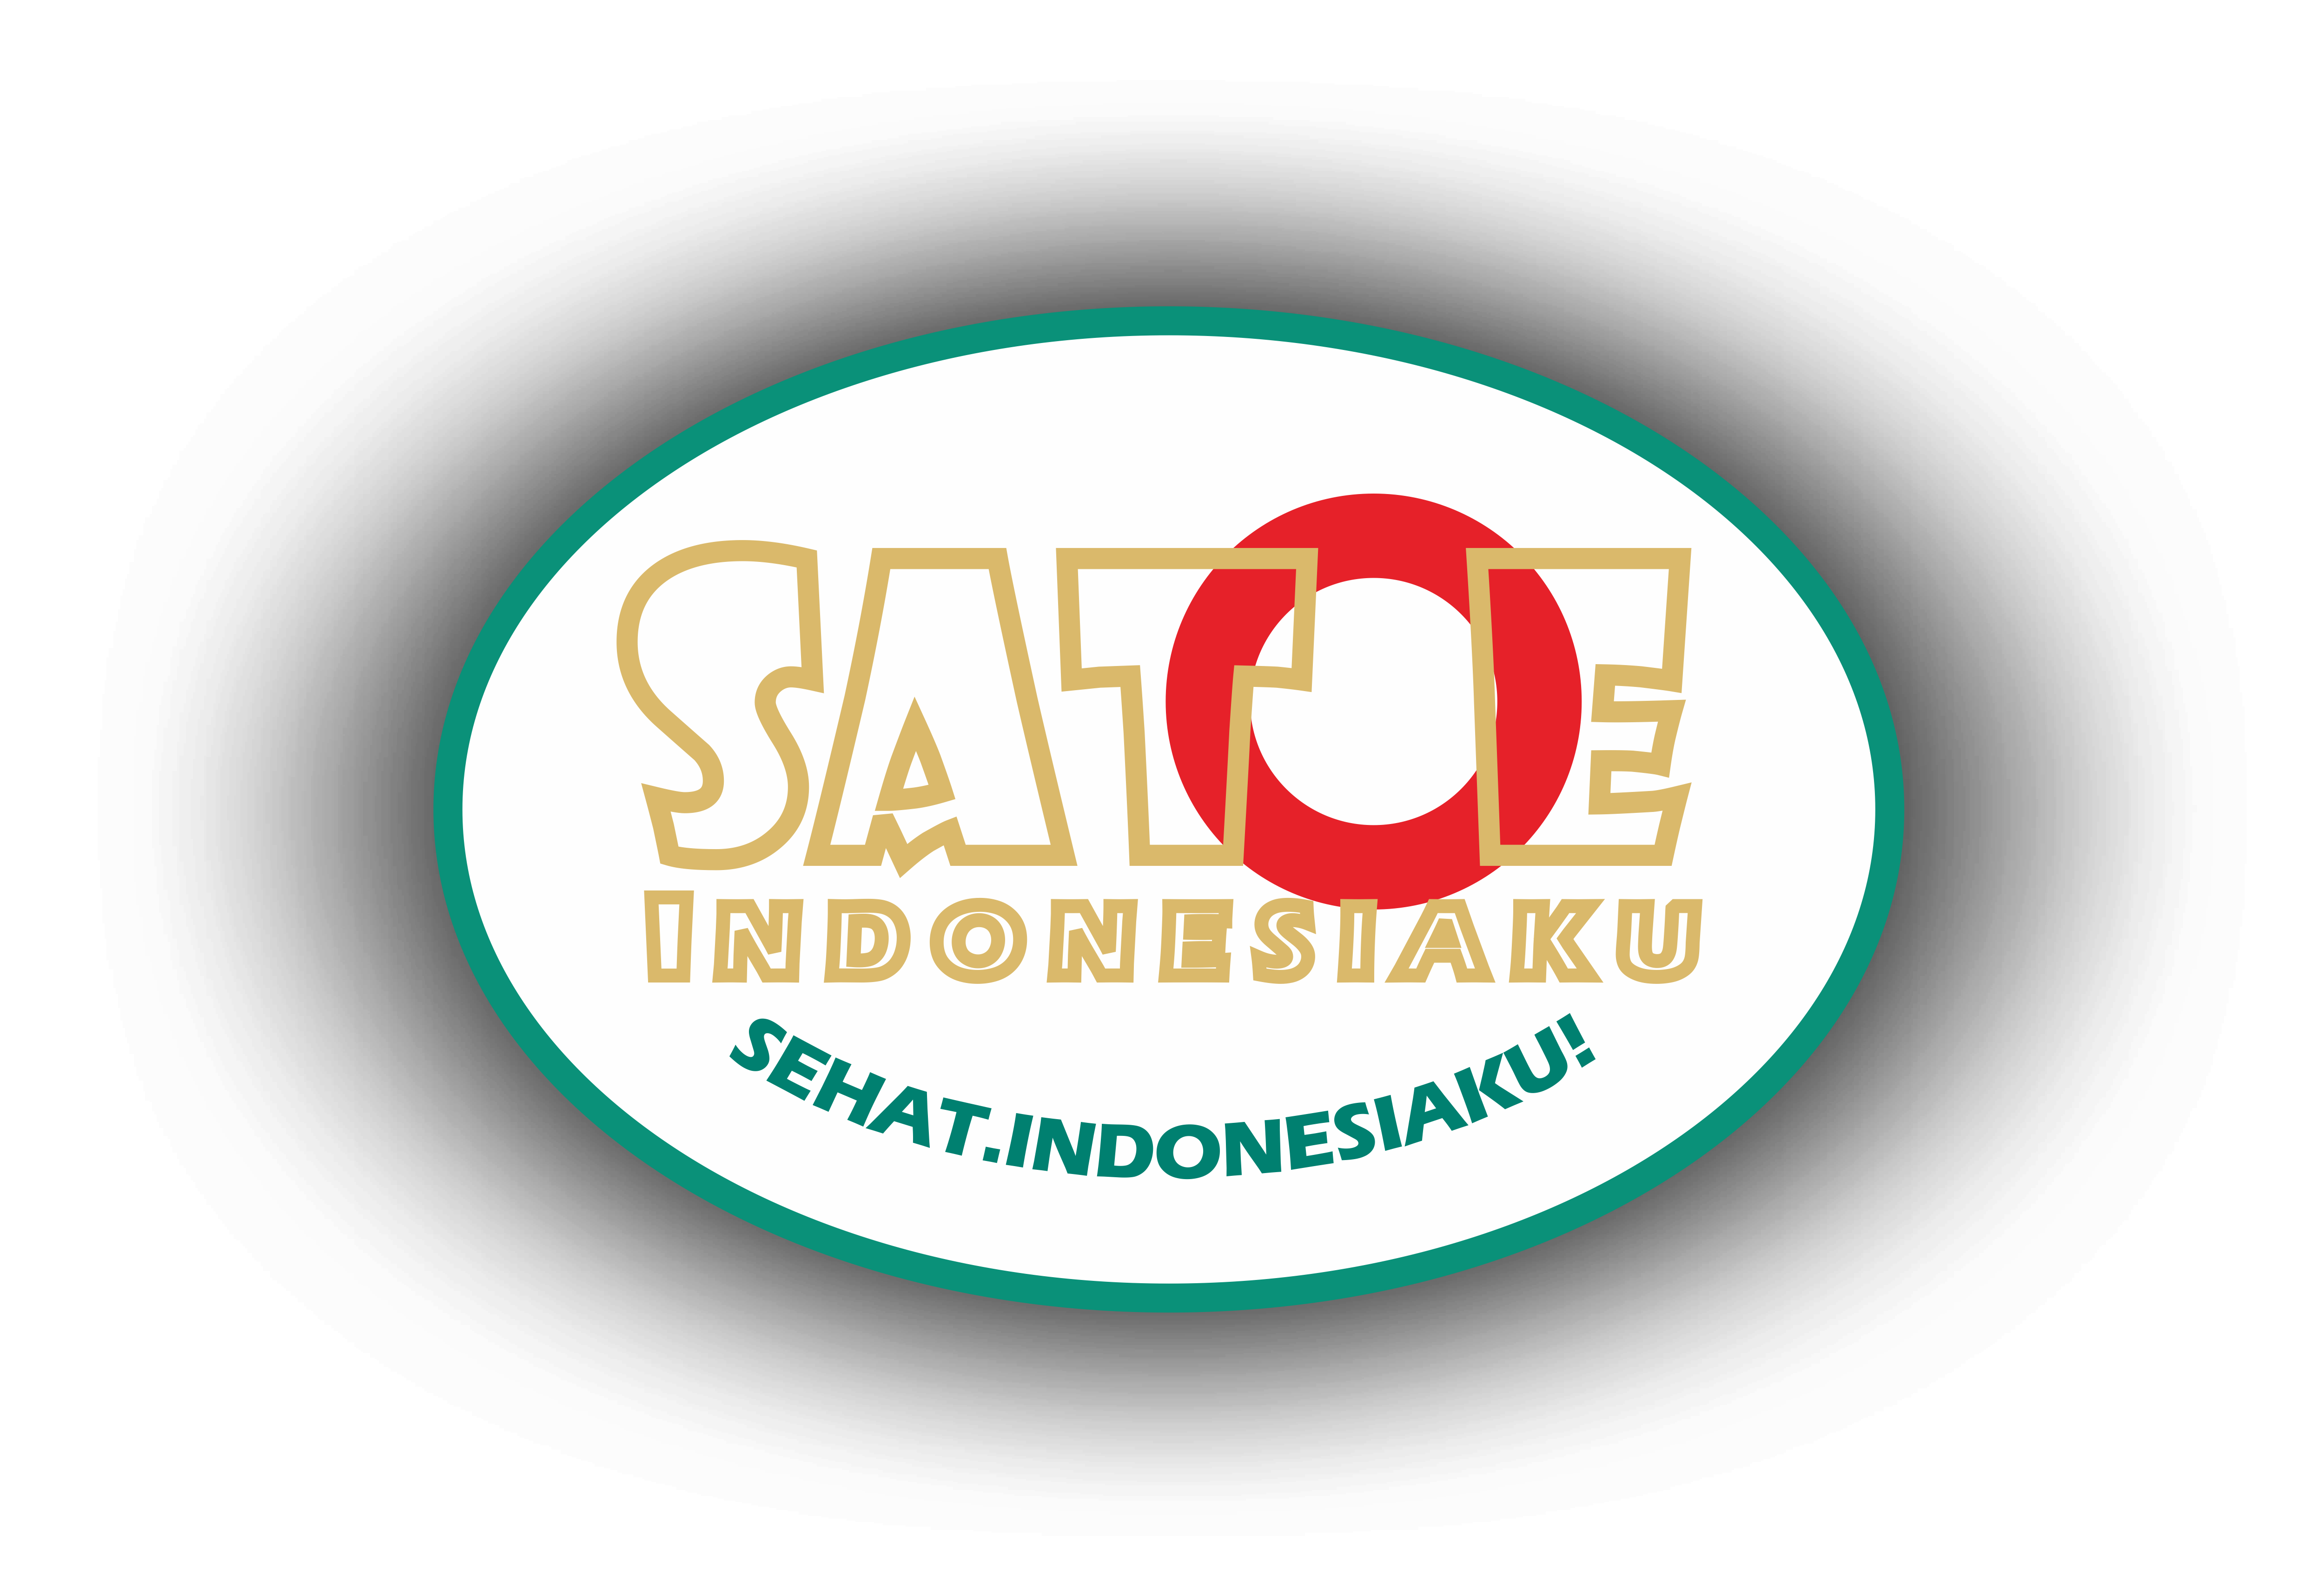 satoe.indonesiaku